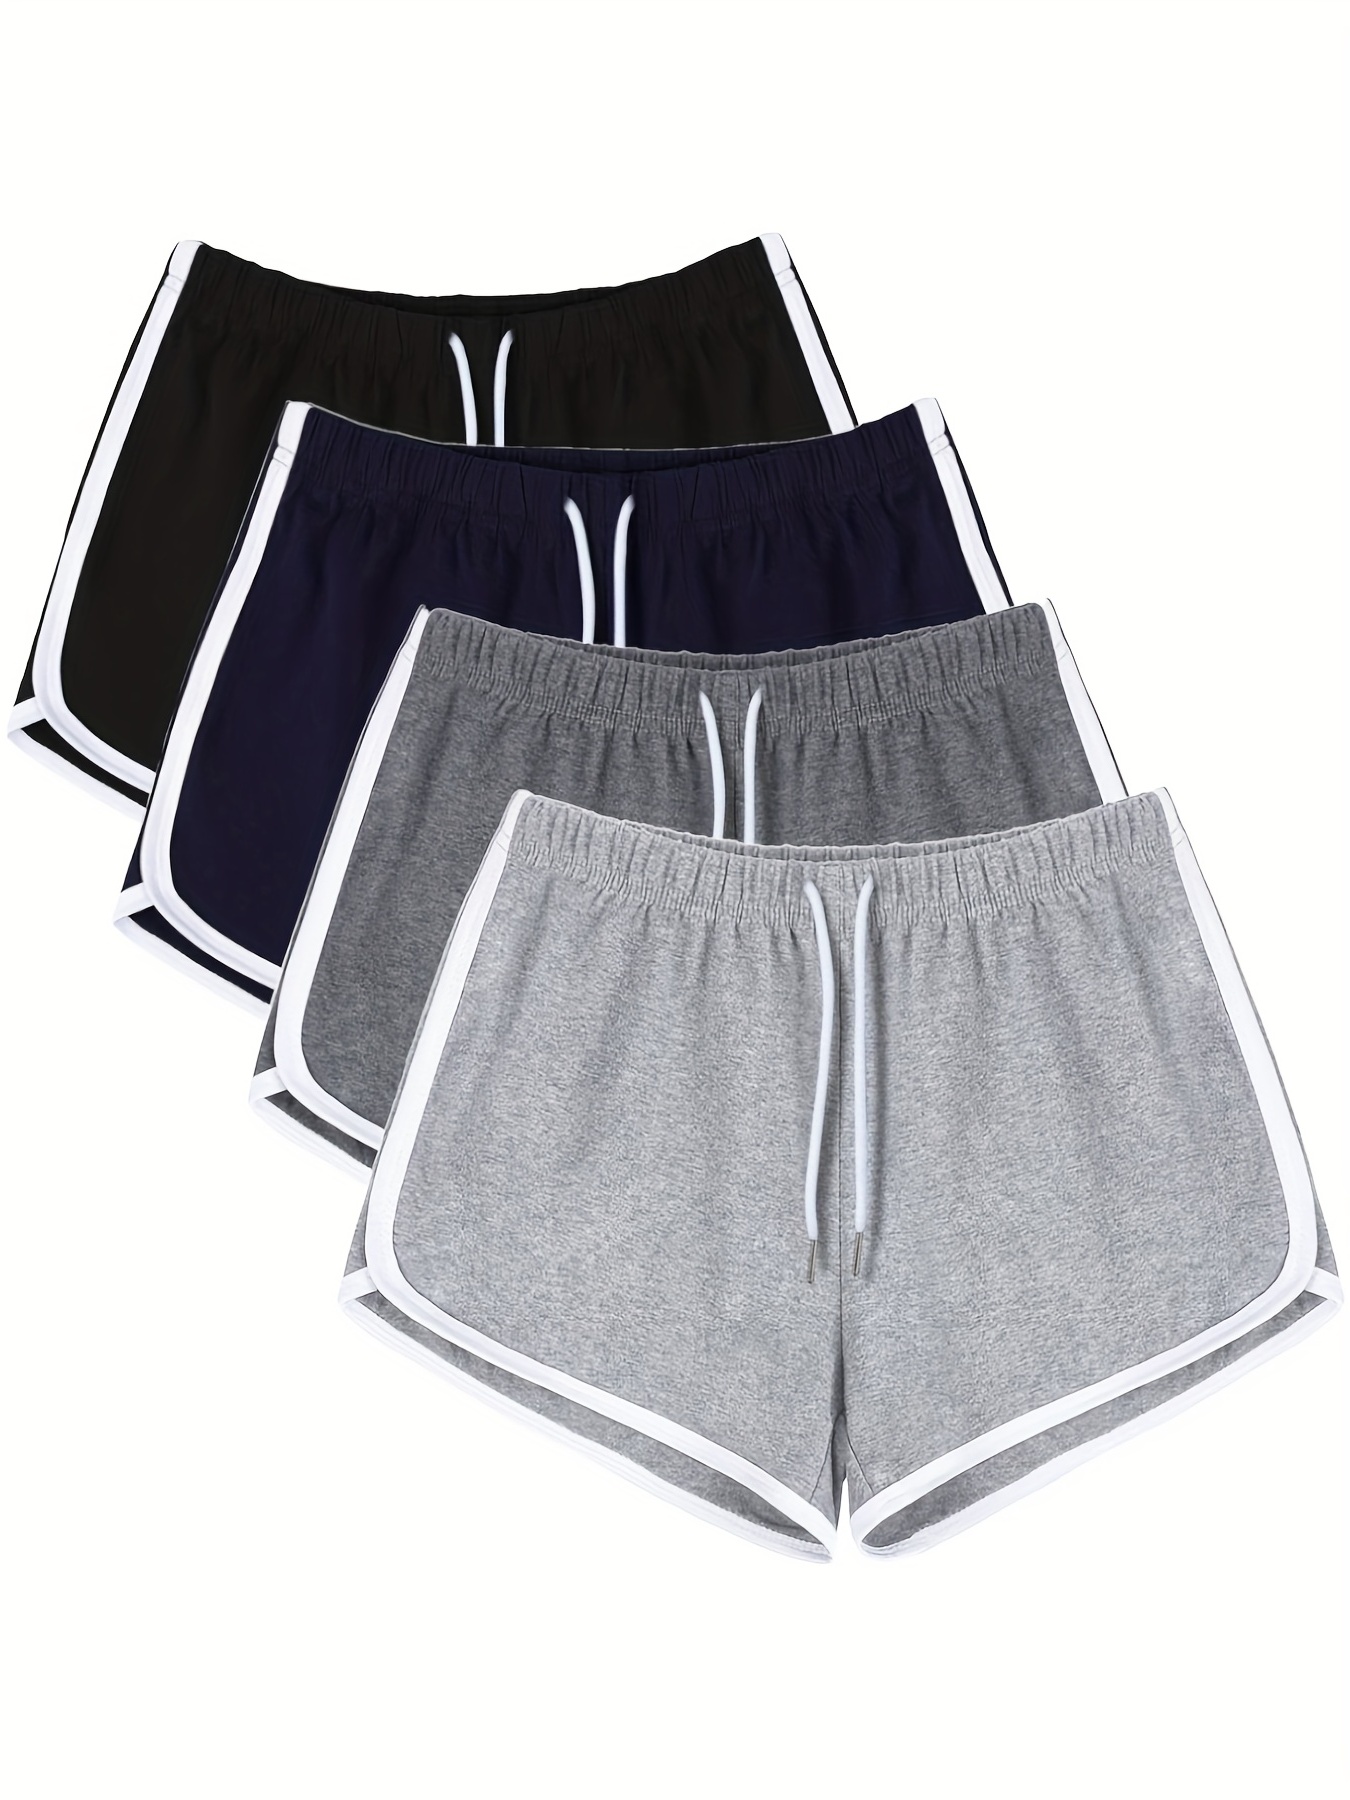 New Women Sport Shorts Yoga Fitness Running Short Pants Outdoor Workout  Elastic Summer Sports Female Shorts